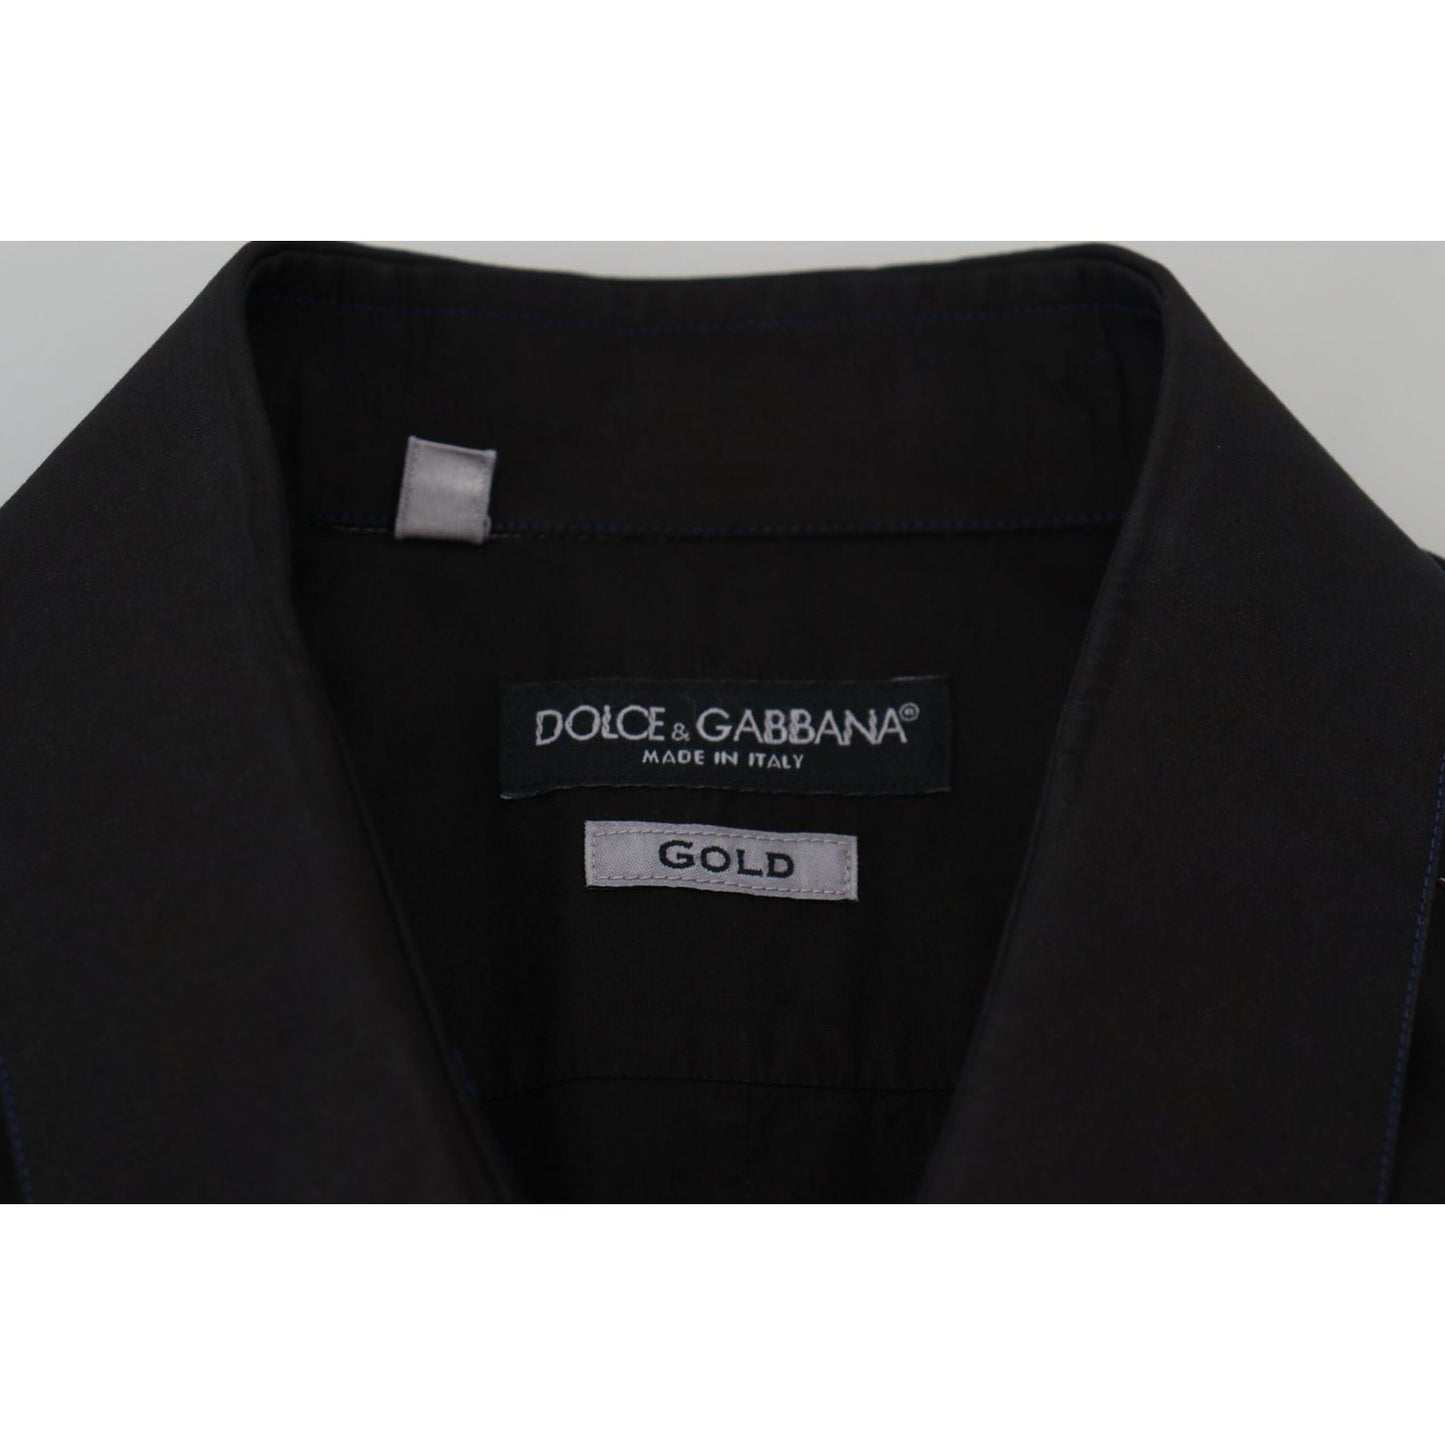 Dolce & Gabbana Elegant Black Formal Cotton Shirt black-cotton-collared-long-sleeve-gold-shirt-1 IMG_4405-scaled-8cd1eef2-9a4.jpg